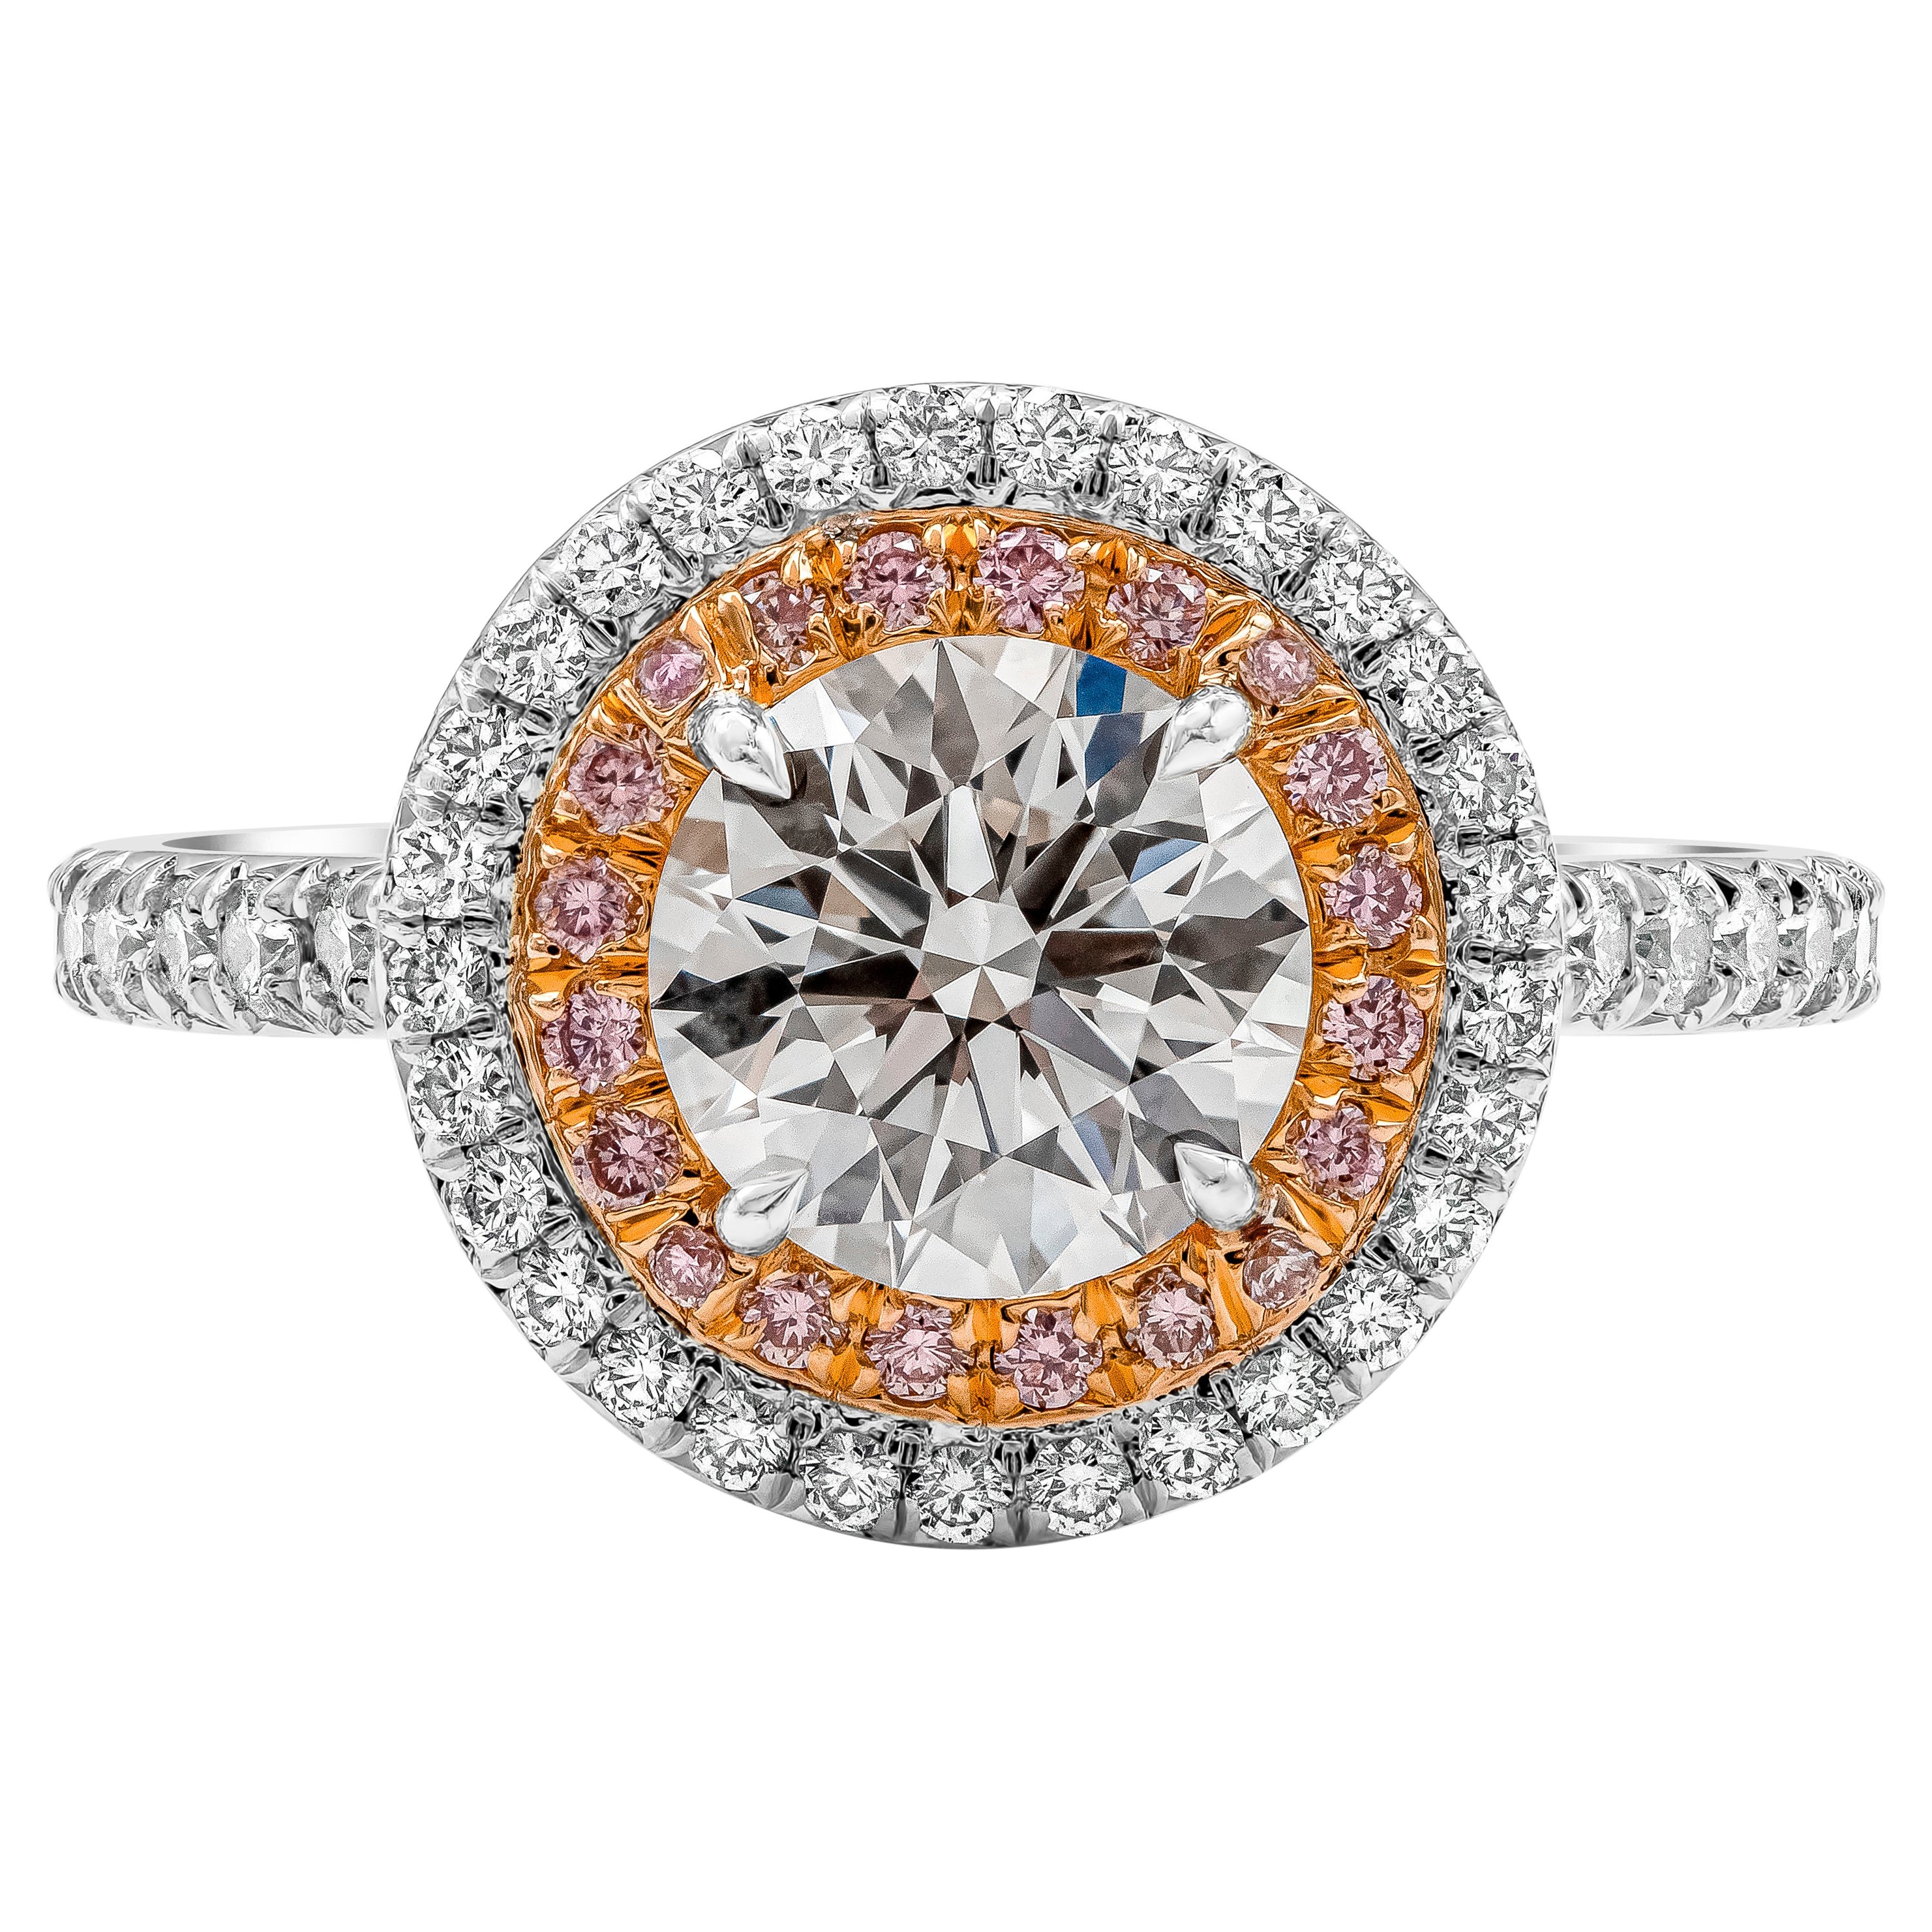 Tiffany & Co. Soleste 1.26 Carat Round Diamond Double Halo Engagement Ring